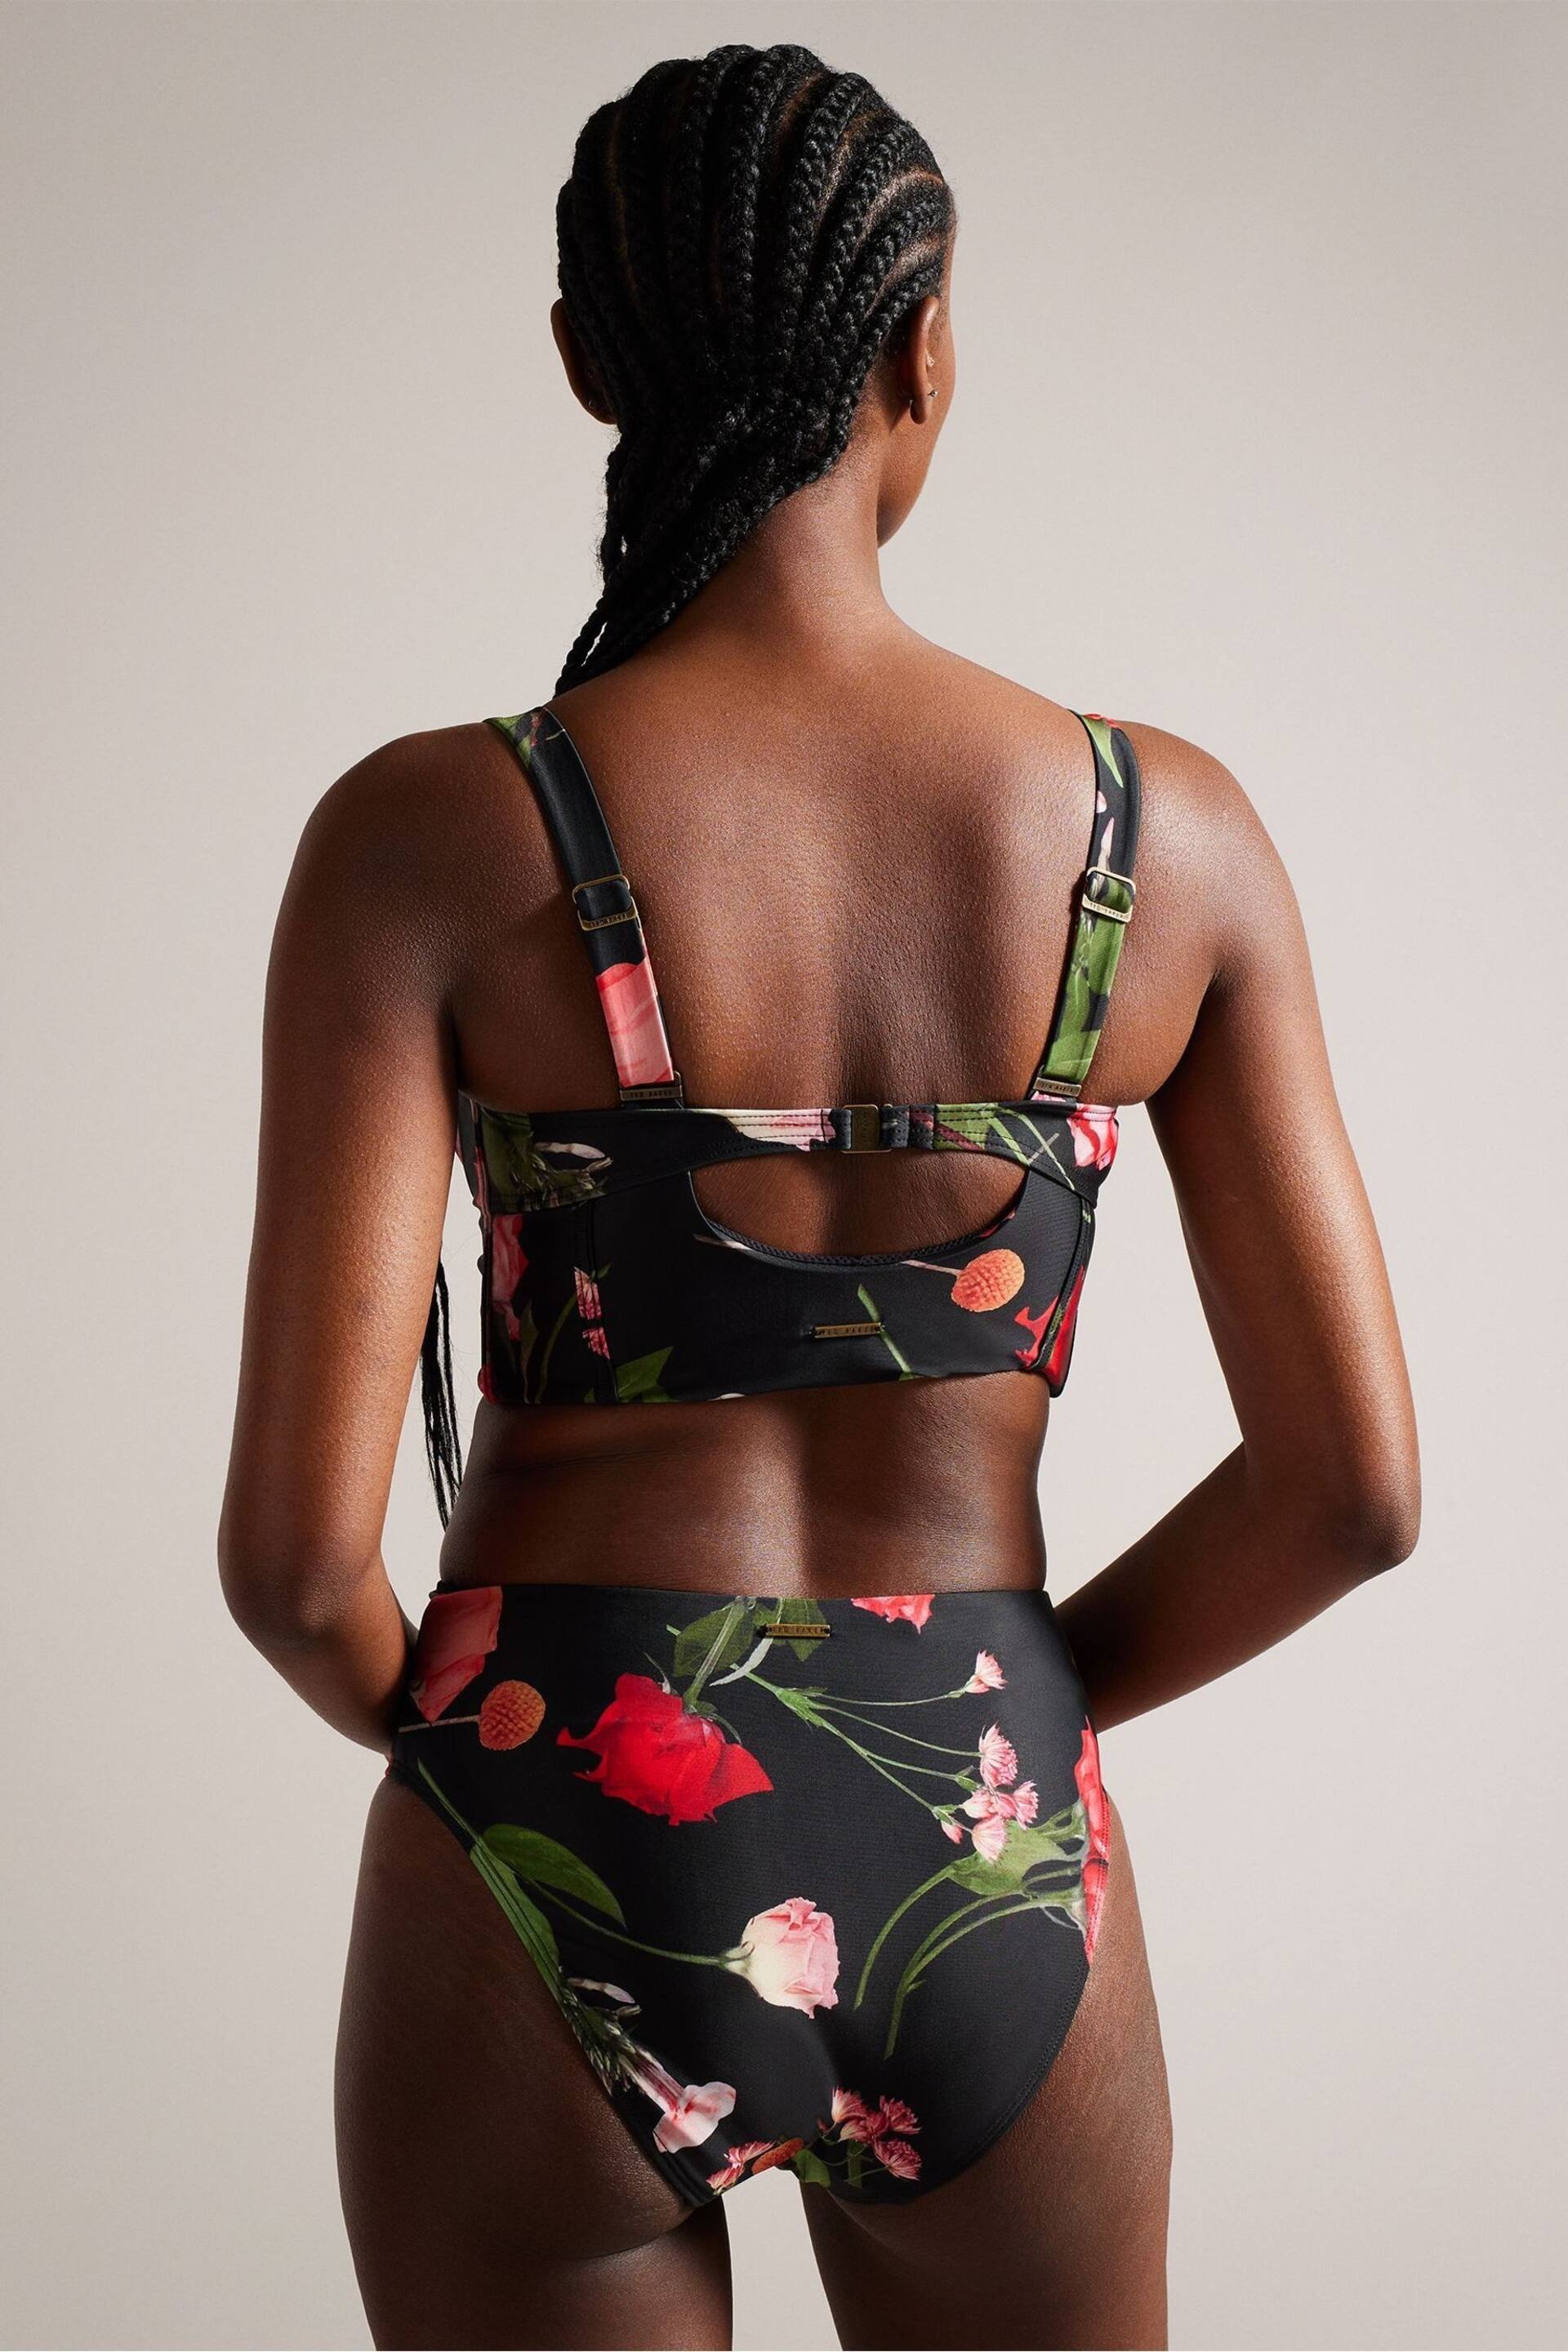 Ted Baker Black Printed Lusiye Longline Bikini Top - Image 2 of 6